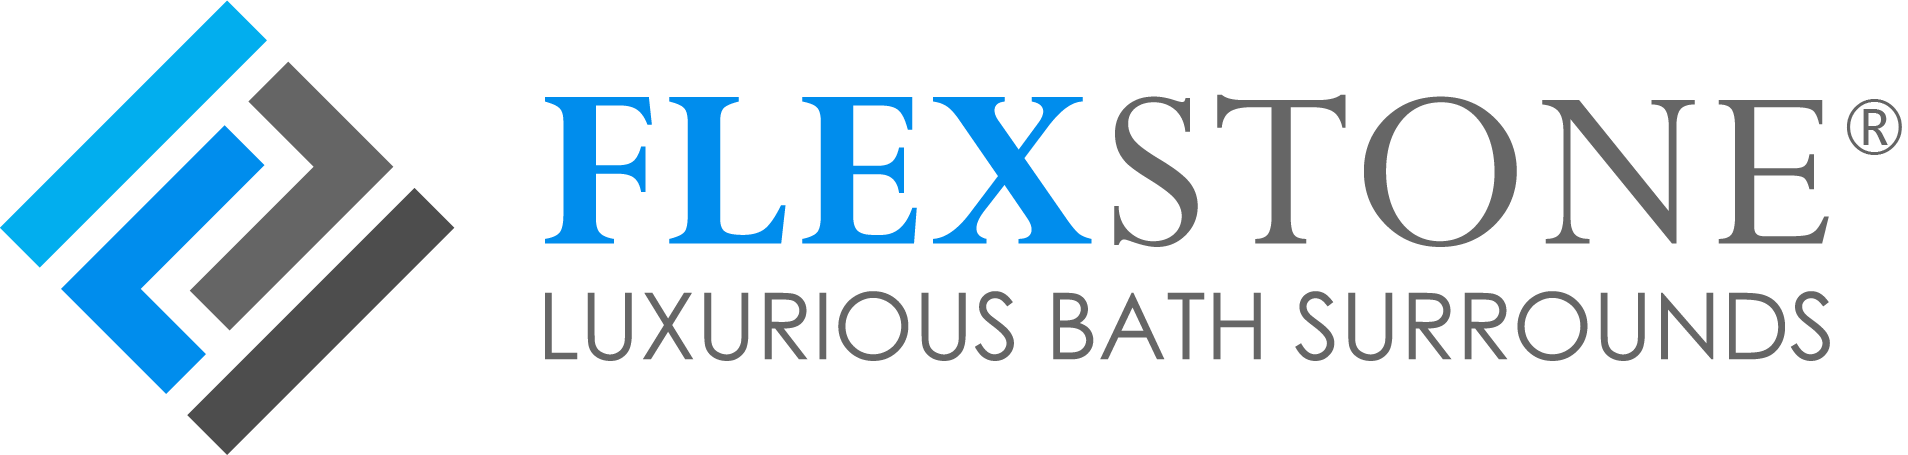 FlexStone Products